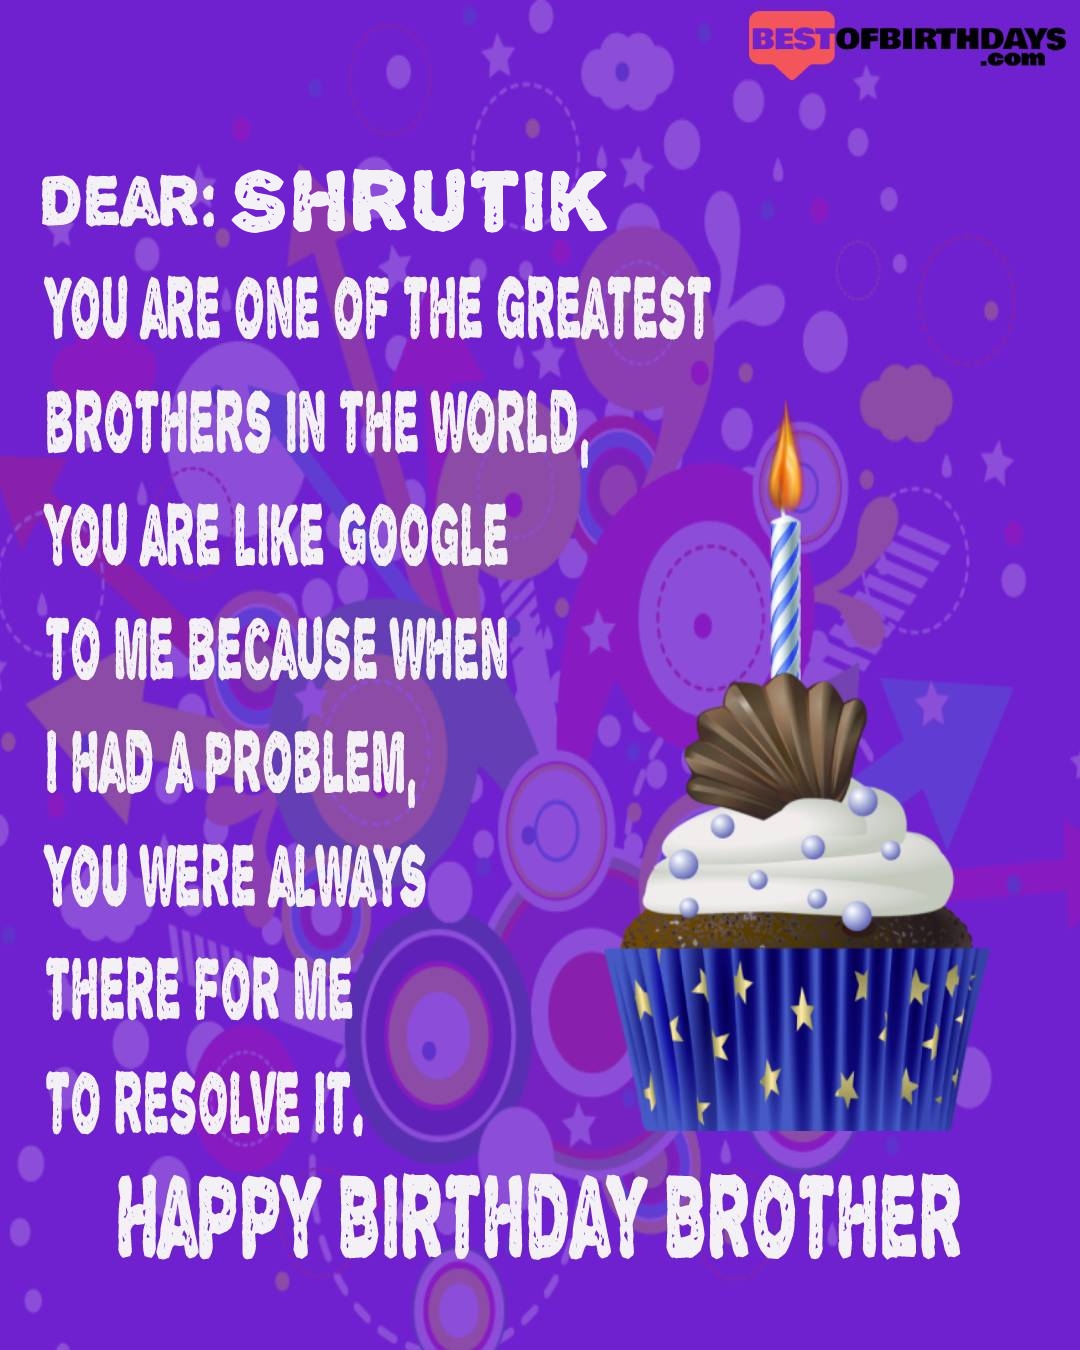 Happy birthday shrutik bhai brother bro